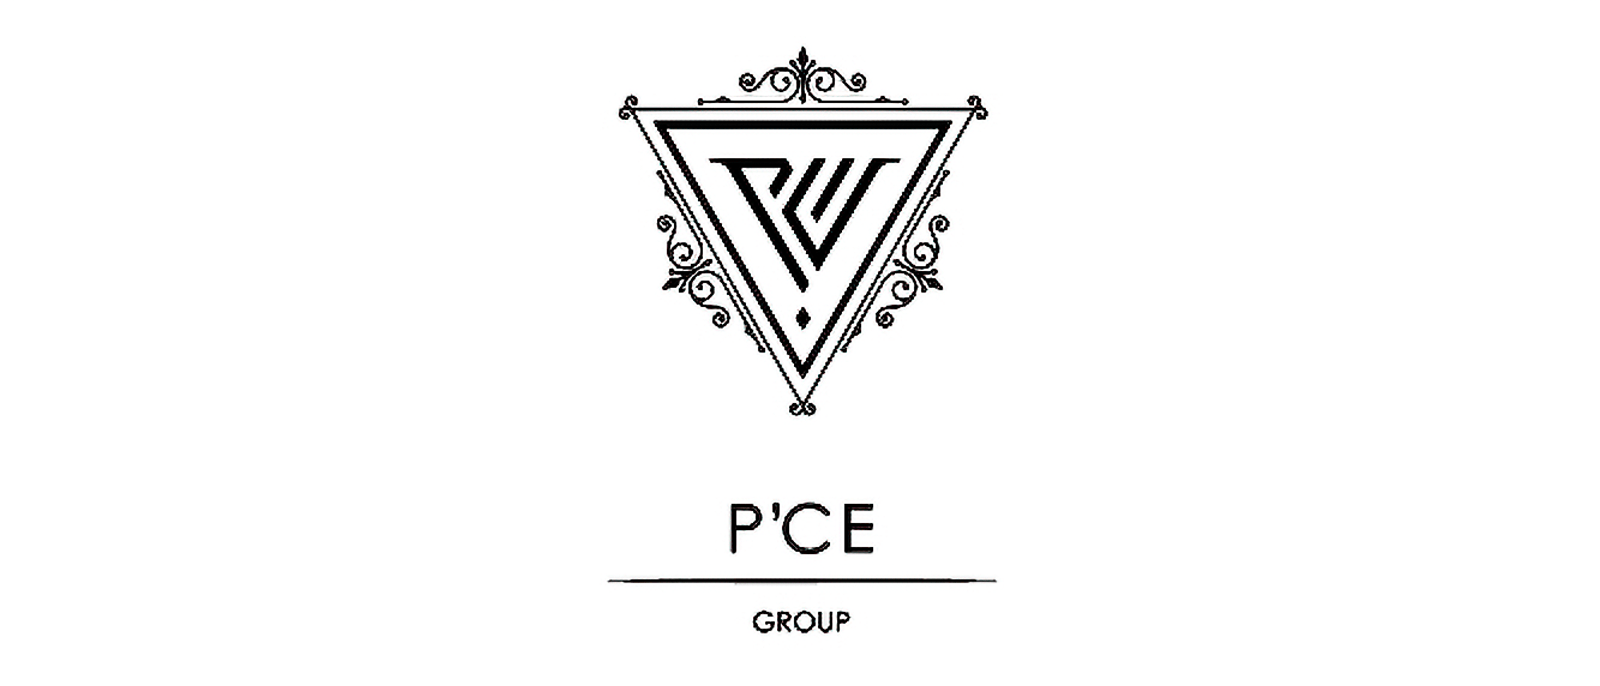 P'CE Group